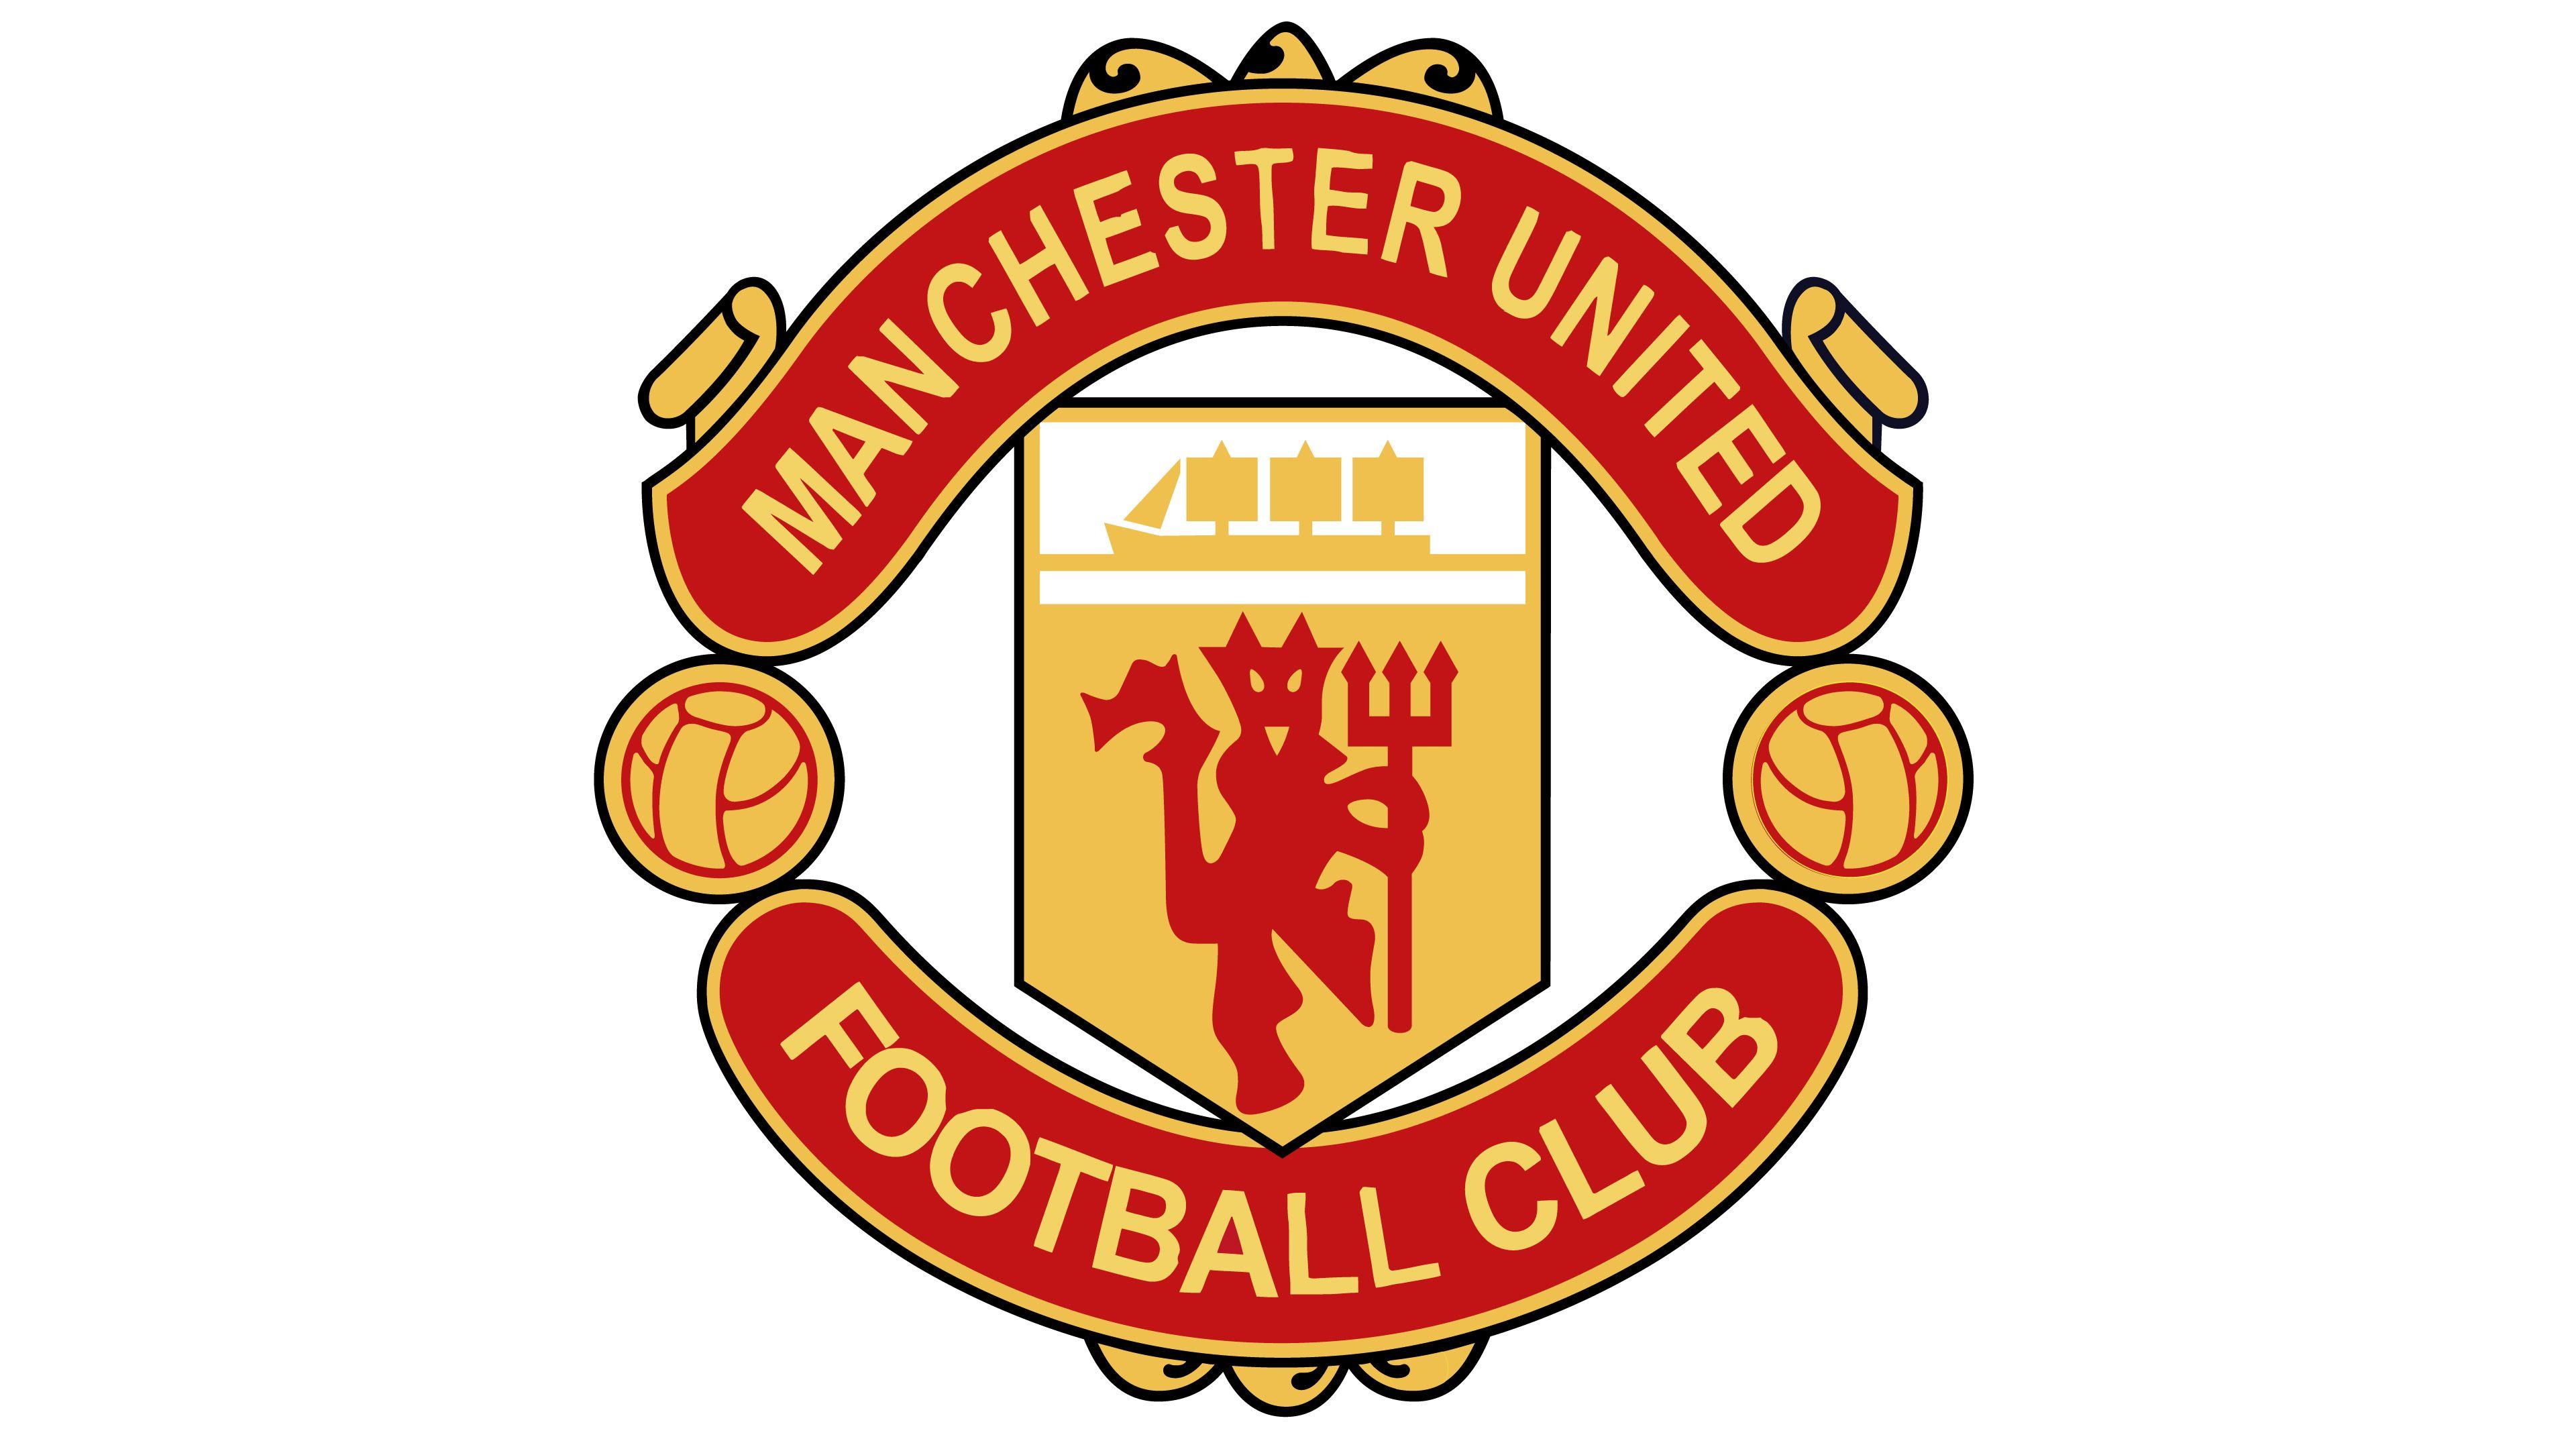 United Logo - Manchester United logo - Interesting History Team Name and emblem